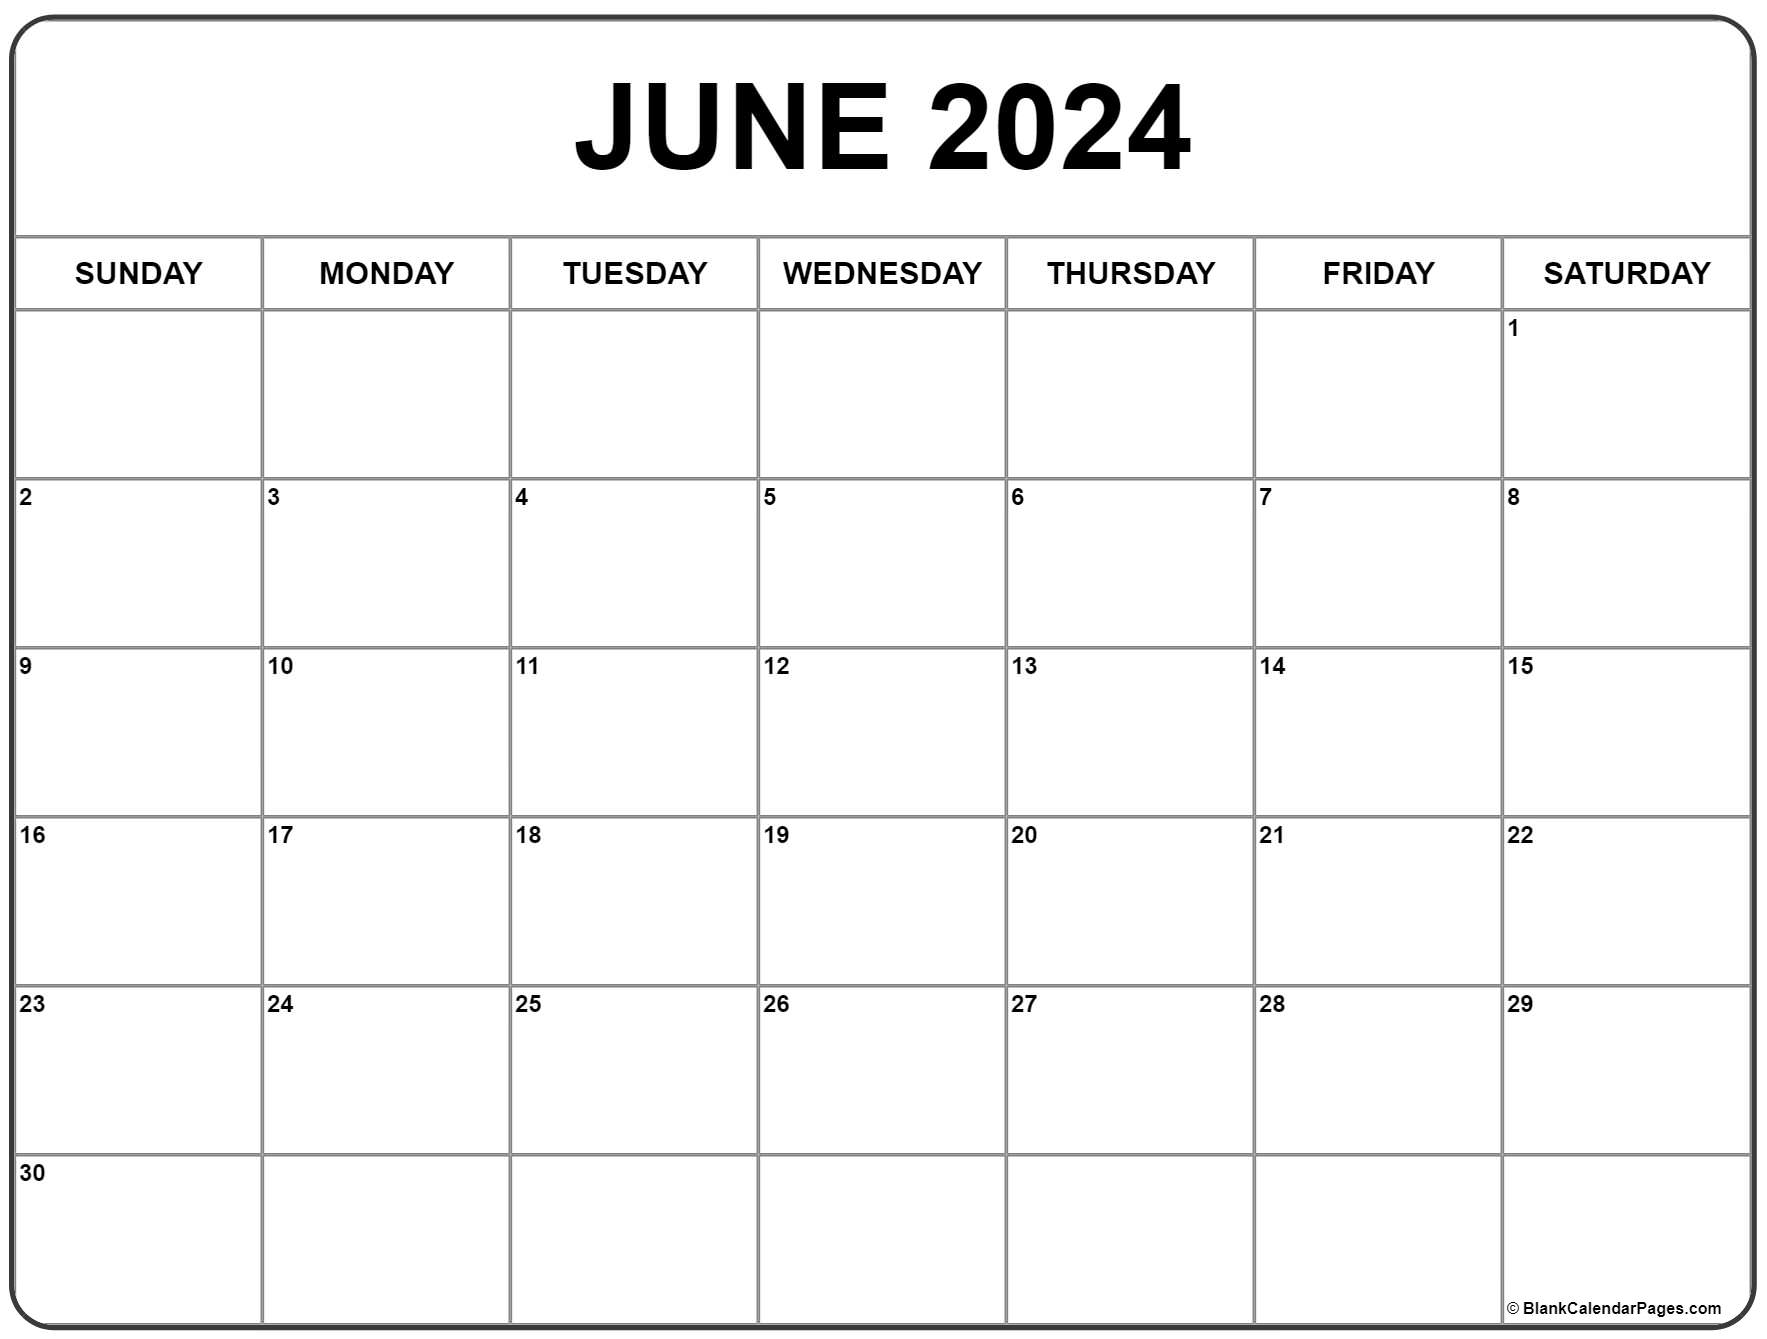 June 2024 Calendar | Free Printable Calendar for Calendar June 2024 Printable